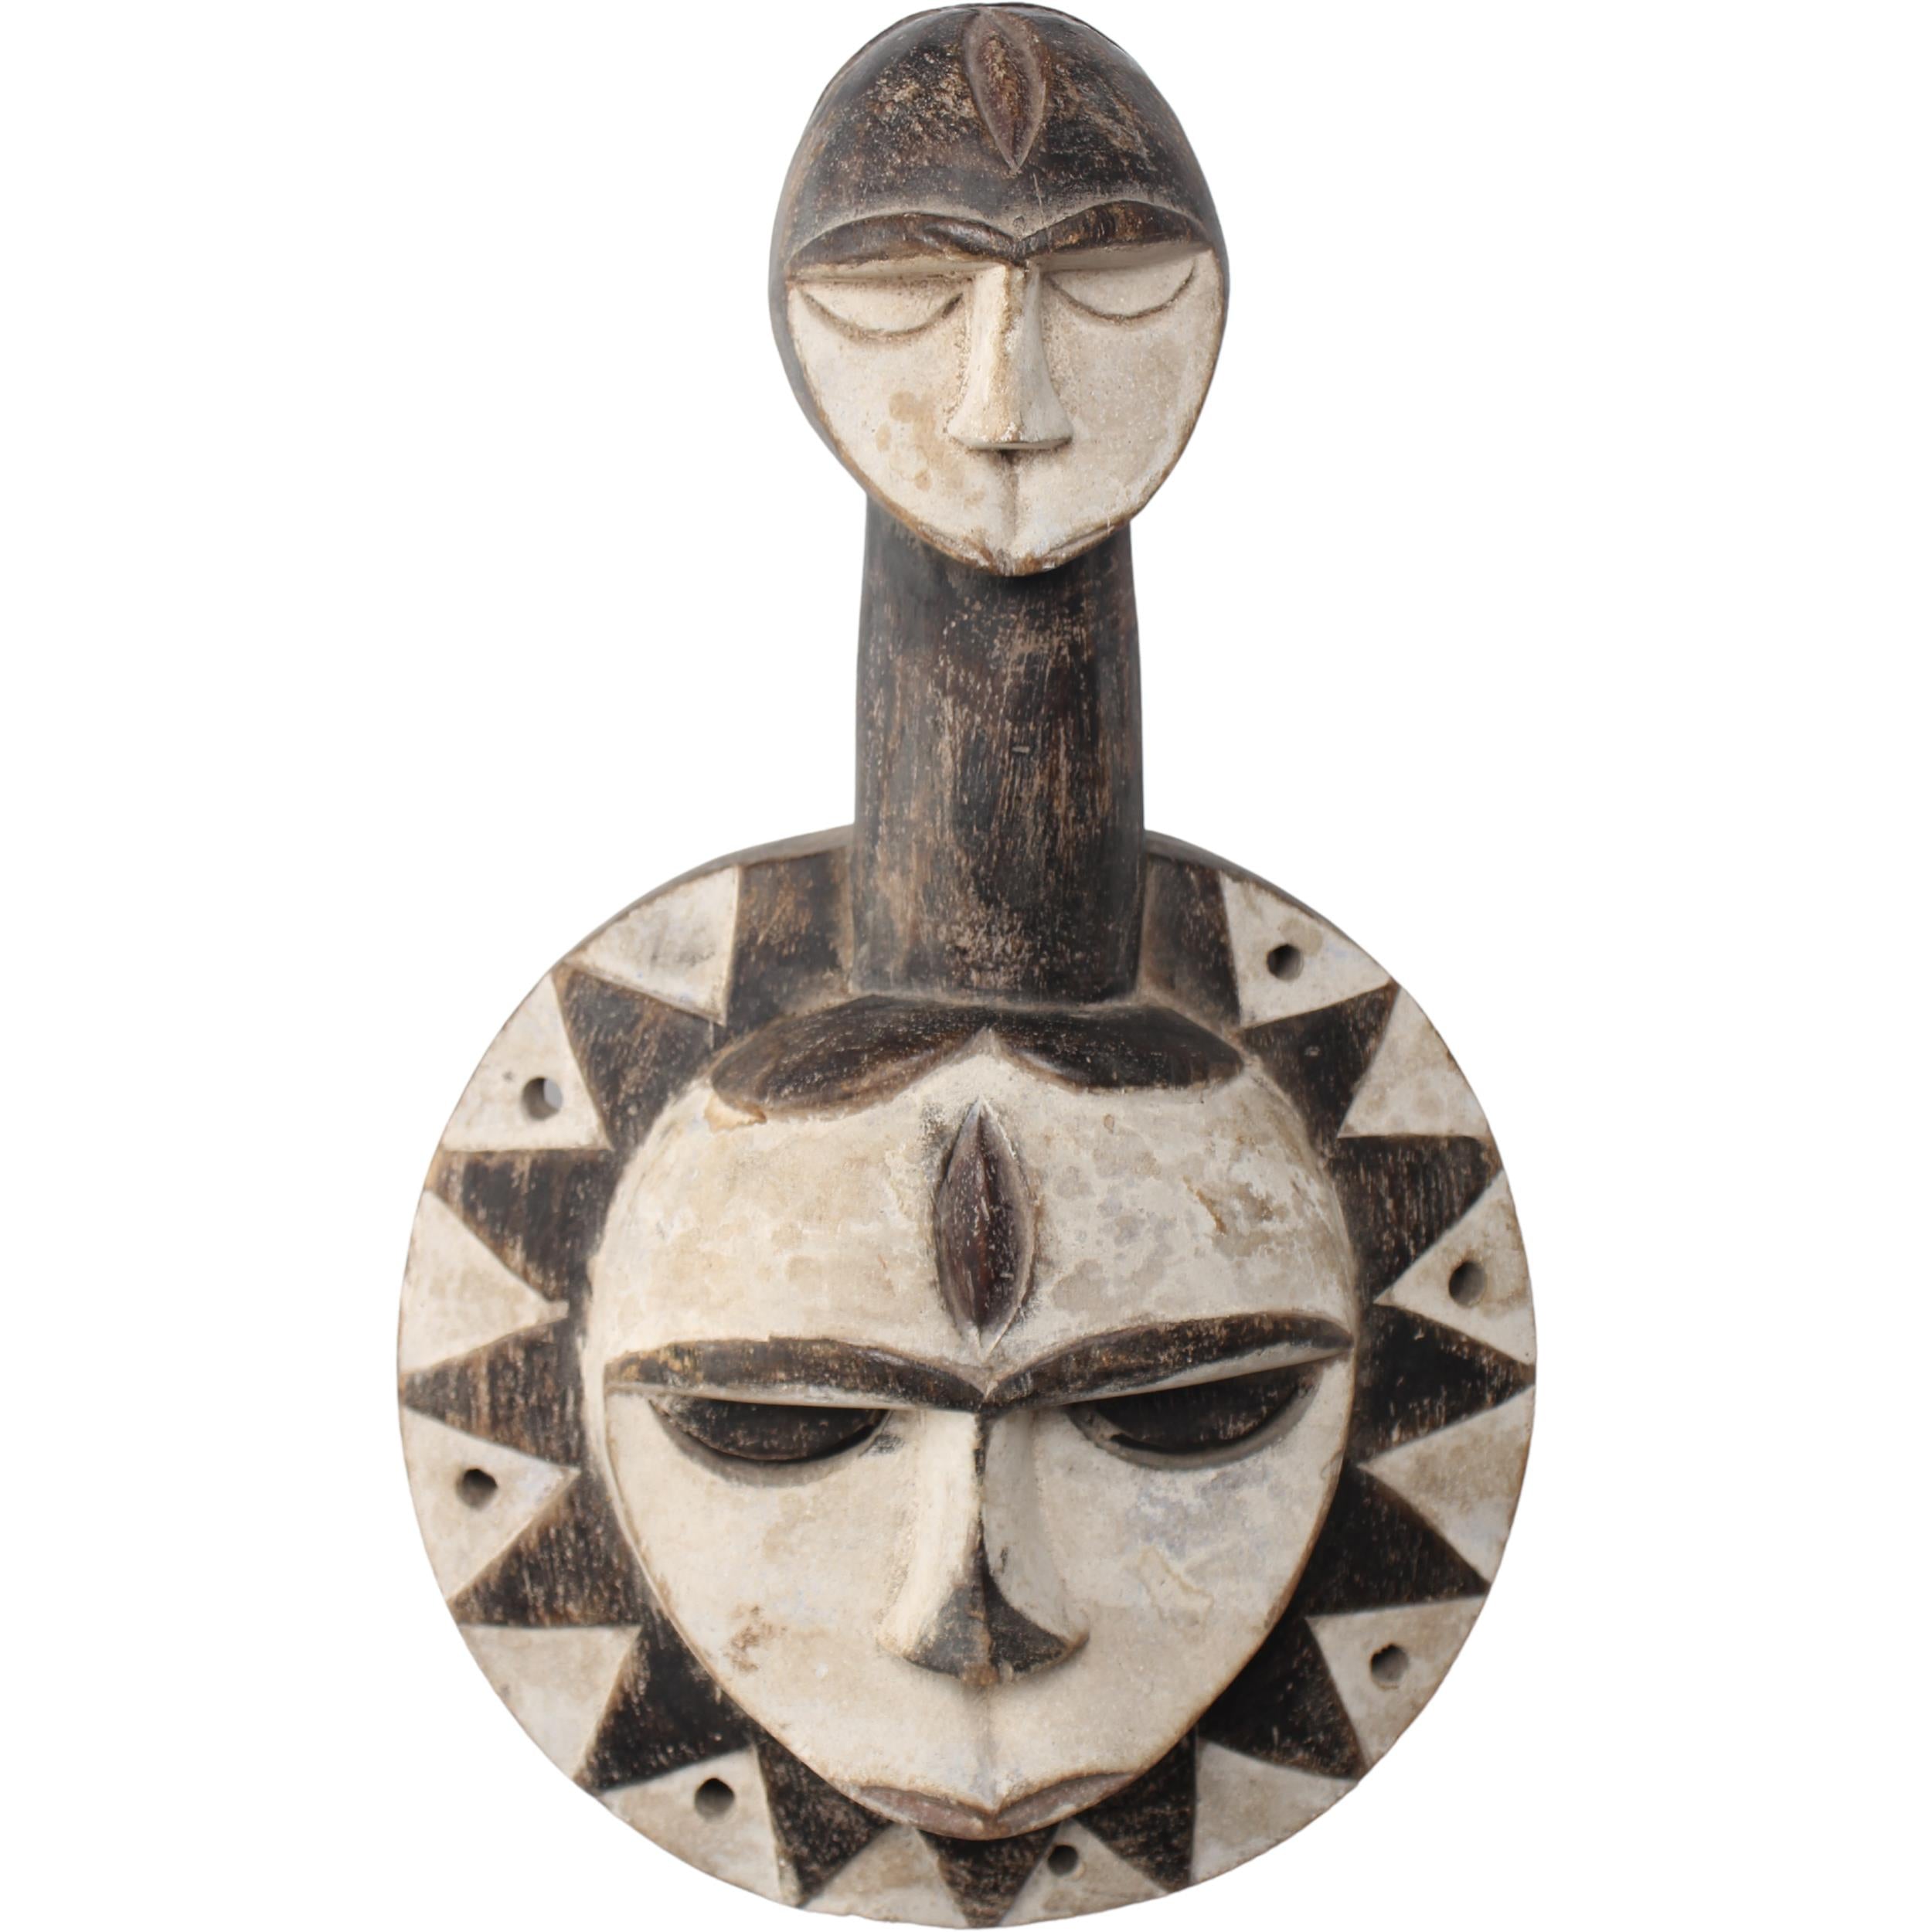 Eket Tribe Mask ~16.1" Tall - Mask